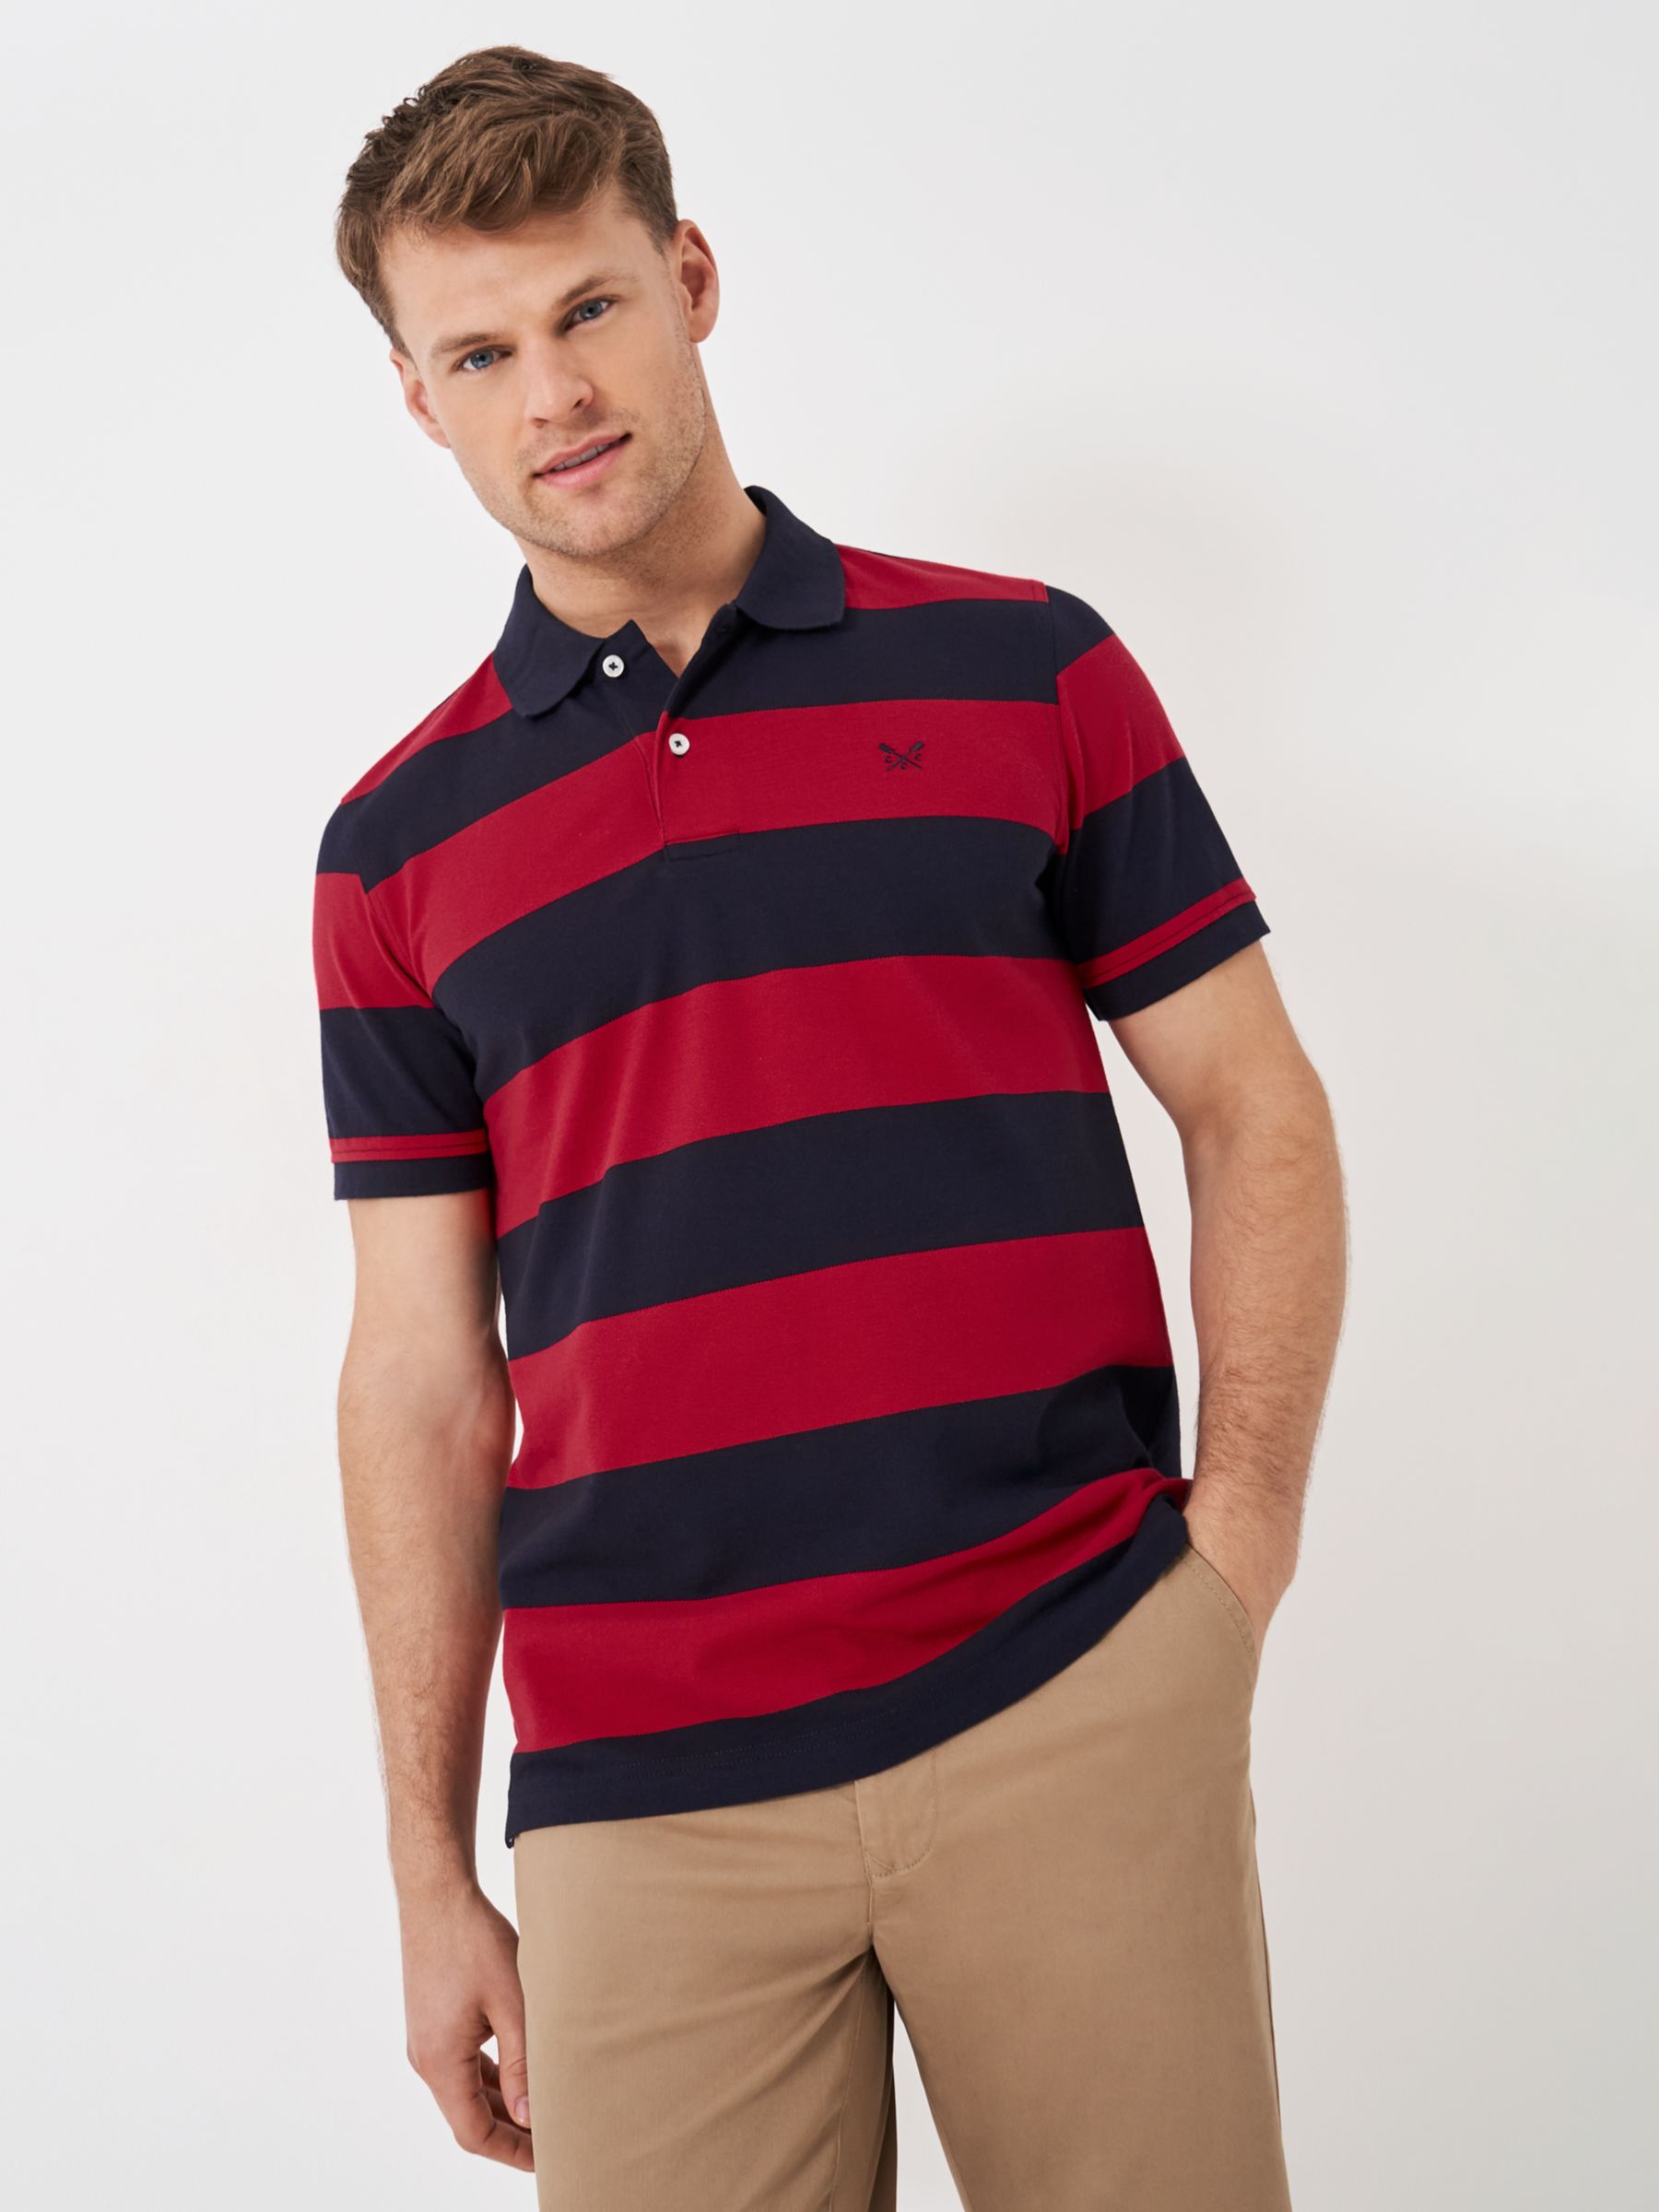 Crew Clothing Stripe Polo Shirt, Bright Red, L